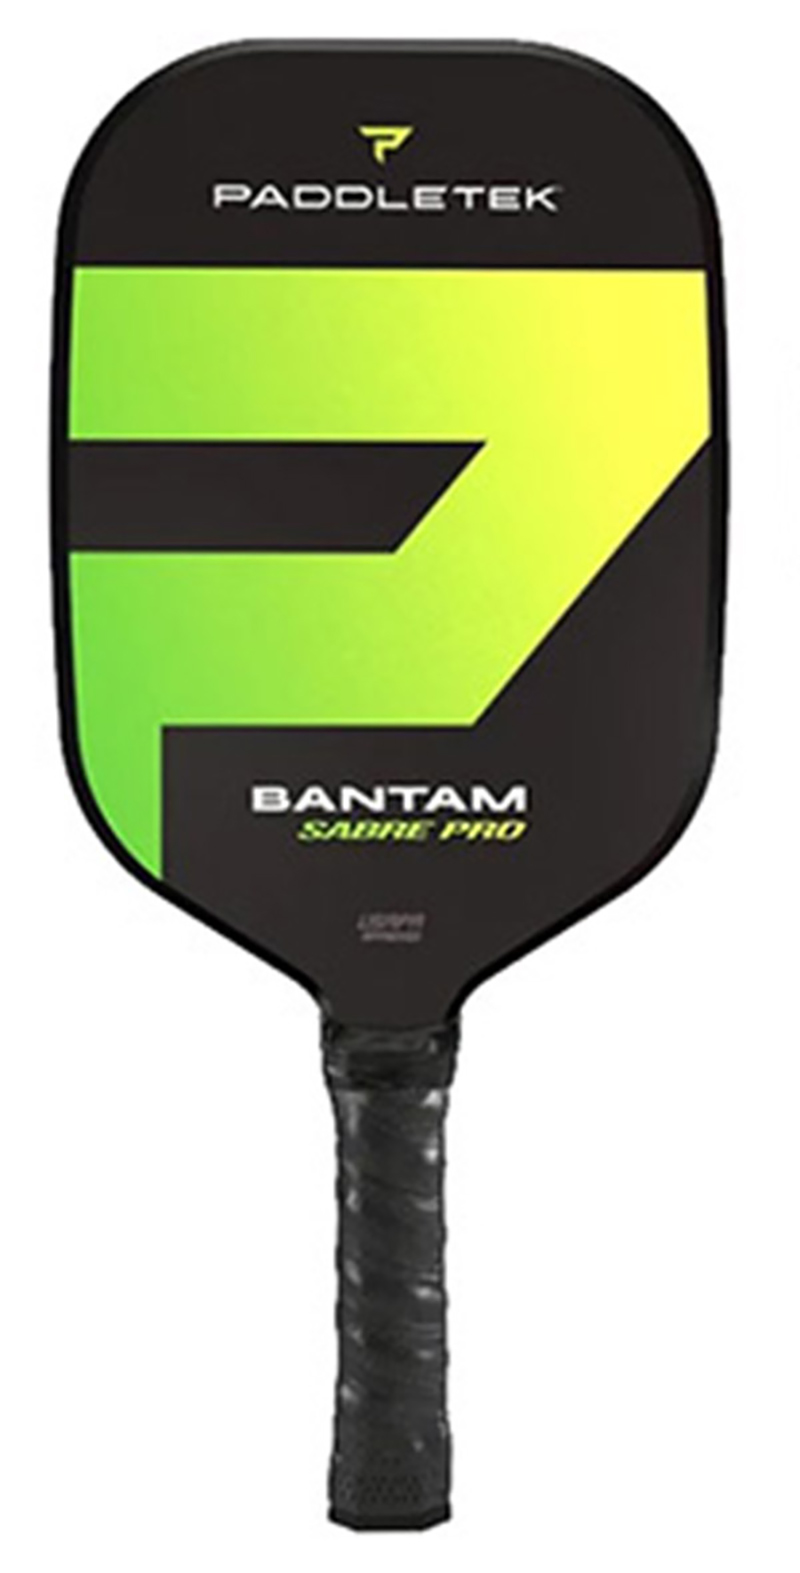 Paddletek Bantam Sabre Pro Pickleball Paddle (Standard) (Green)